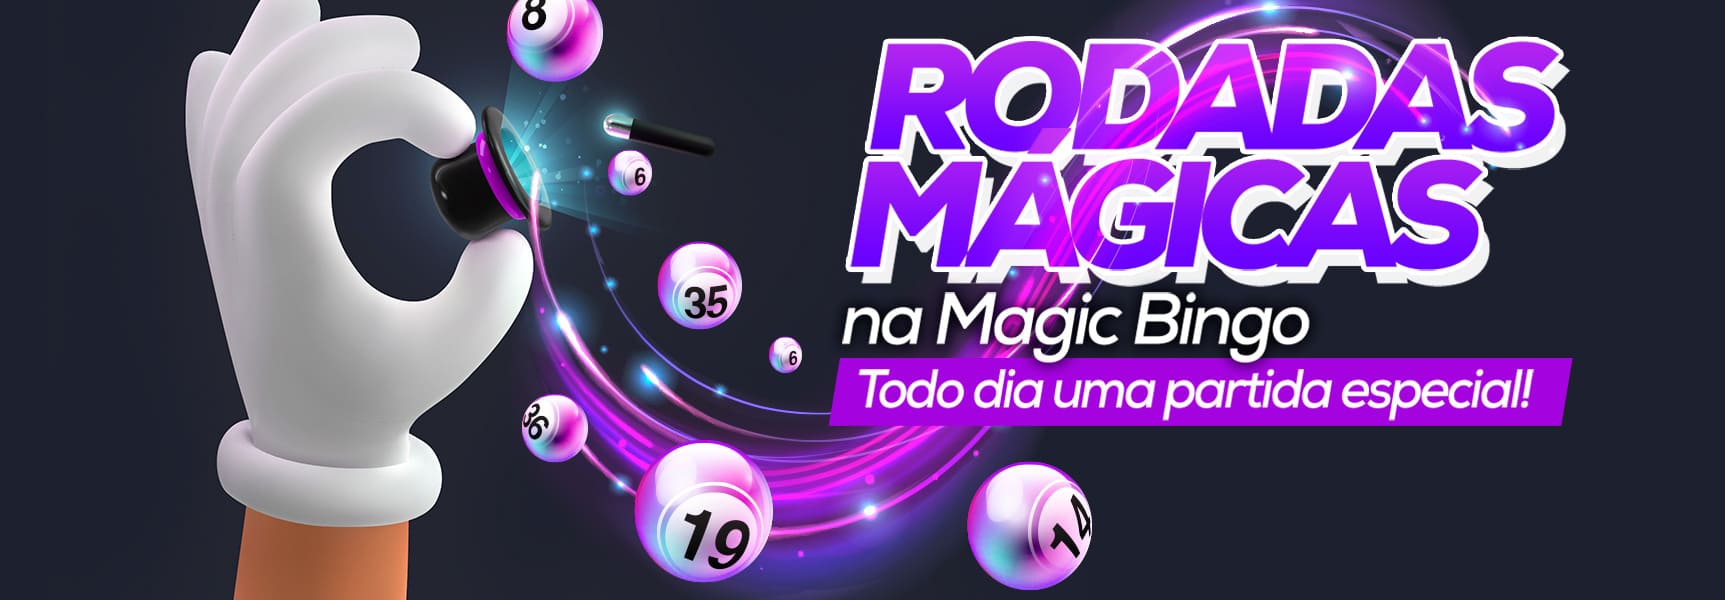 Bingo Online Brasil - Jogue bingo online valendo dinheiro, Best Daily